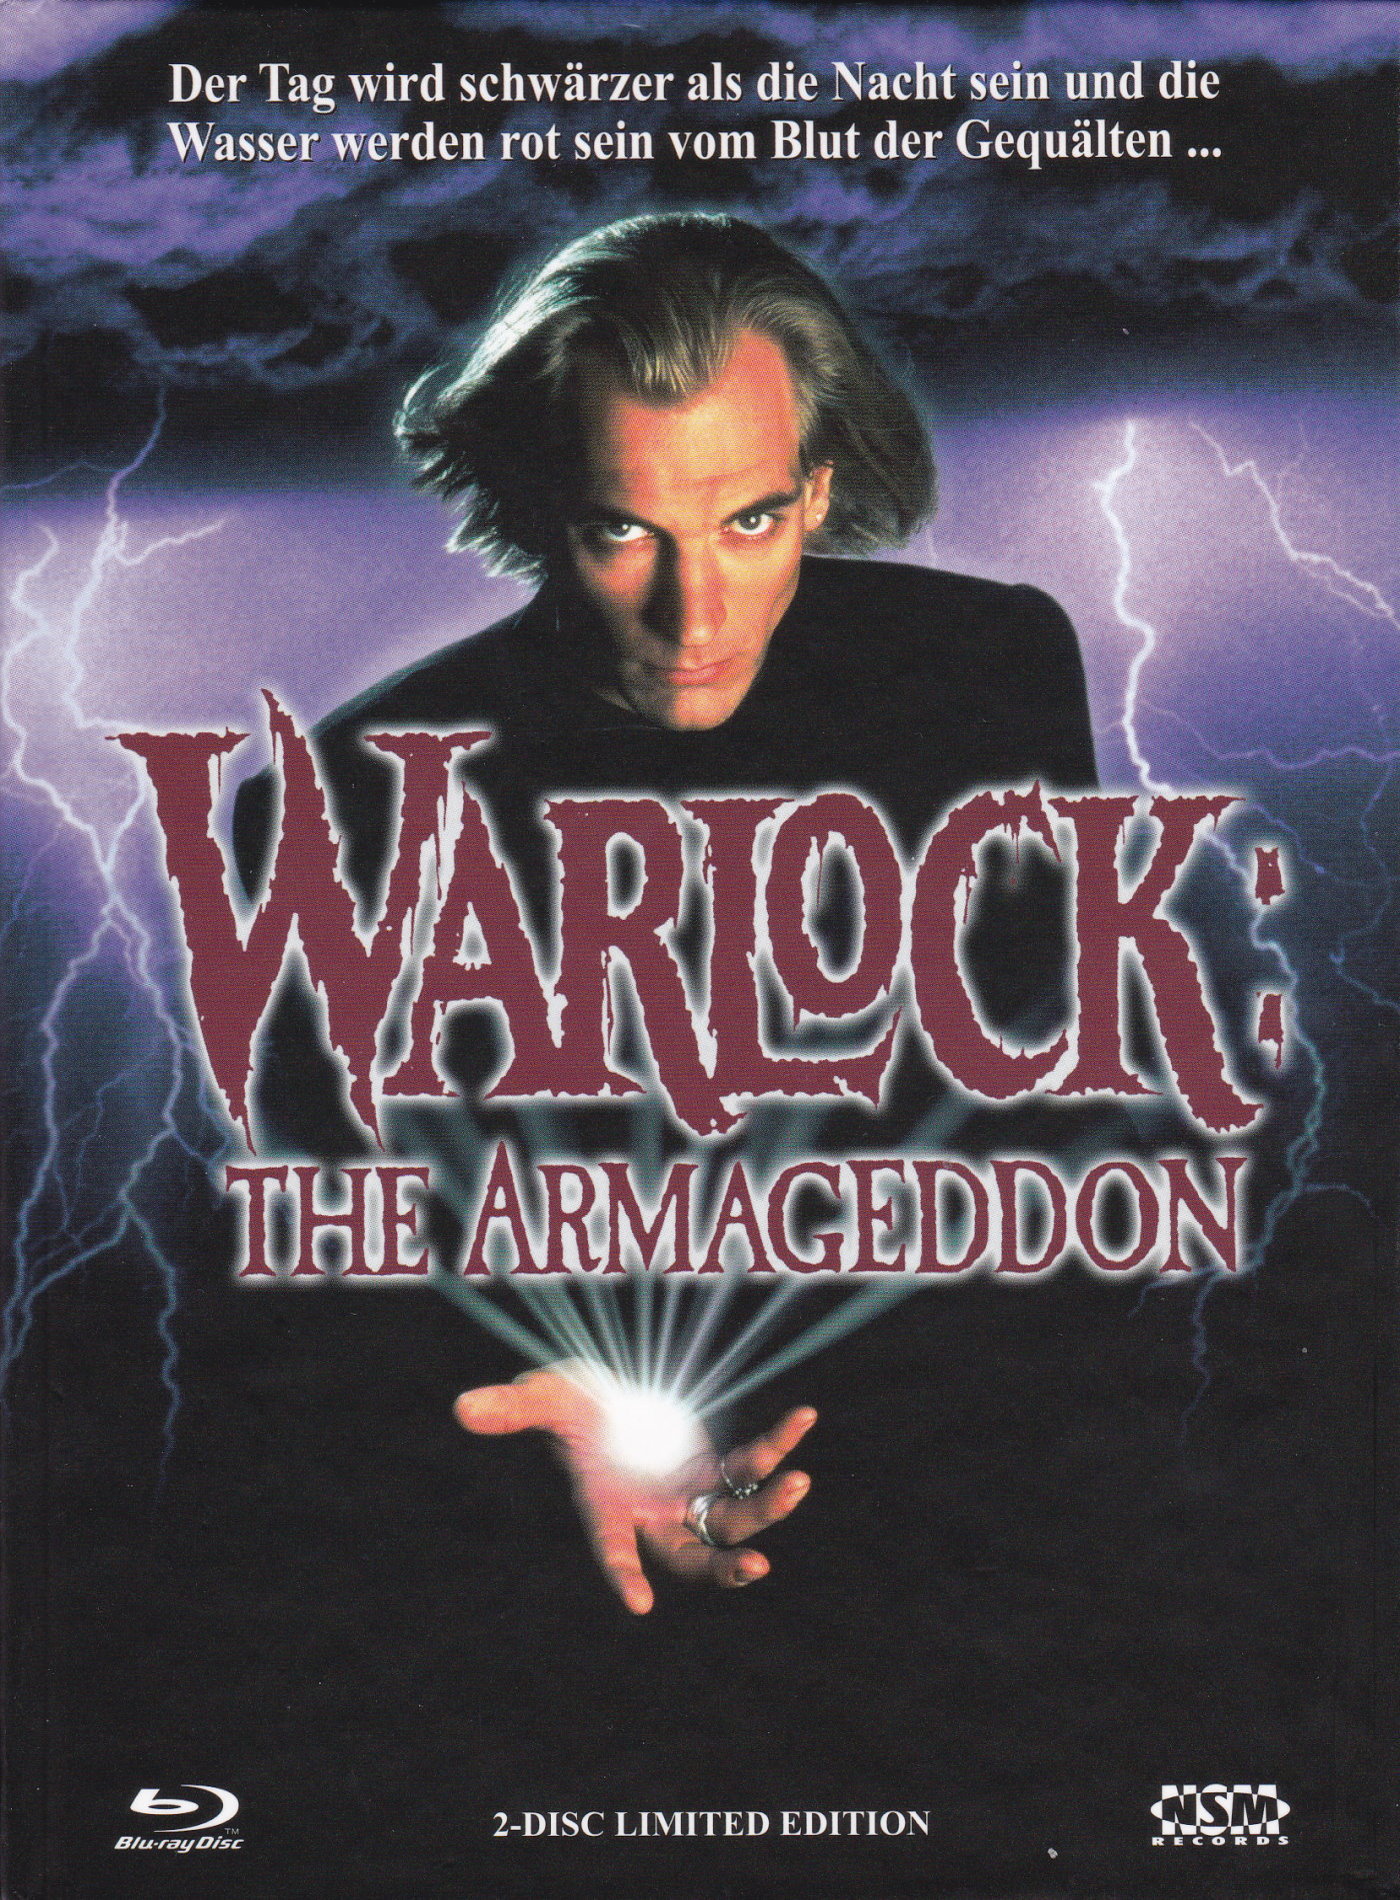 Cover - Warlock - The Armageddon.jpg